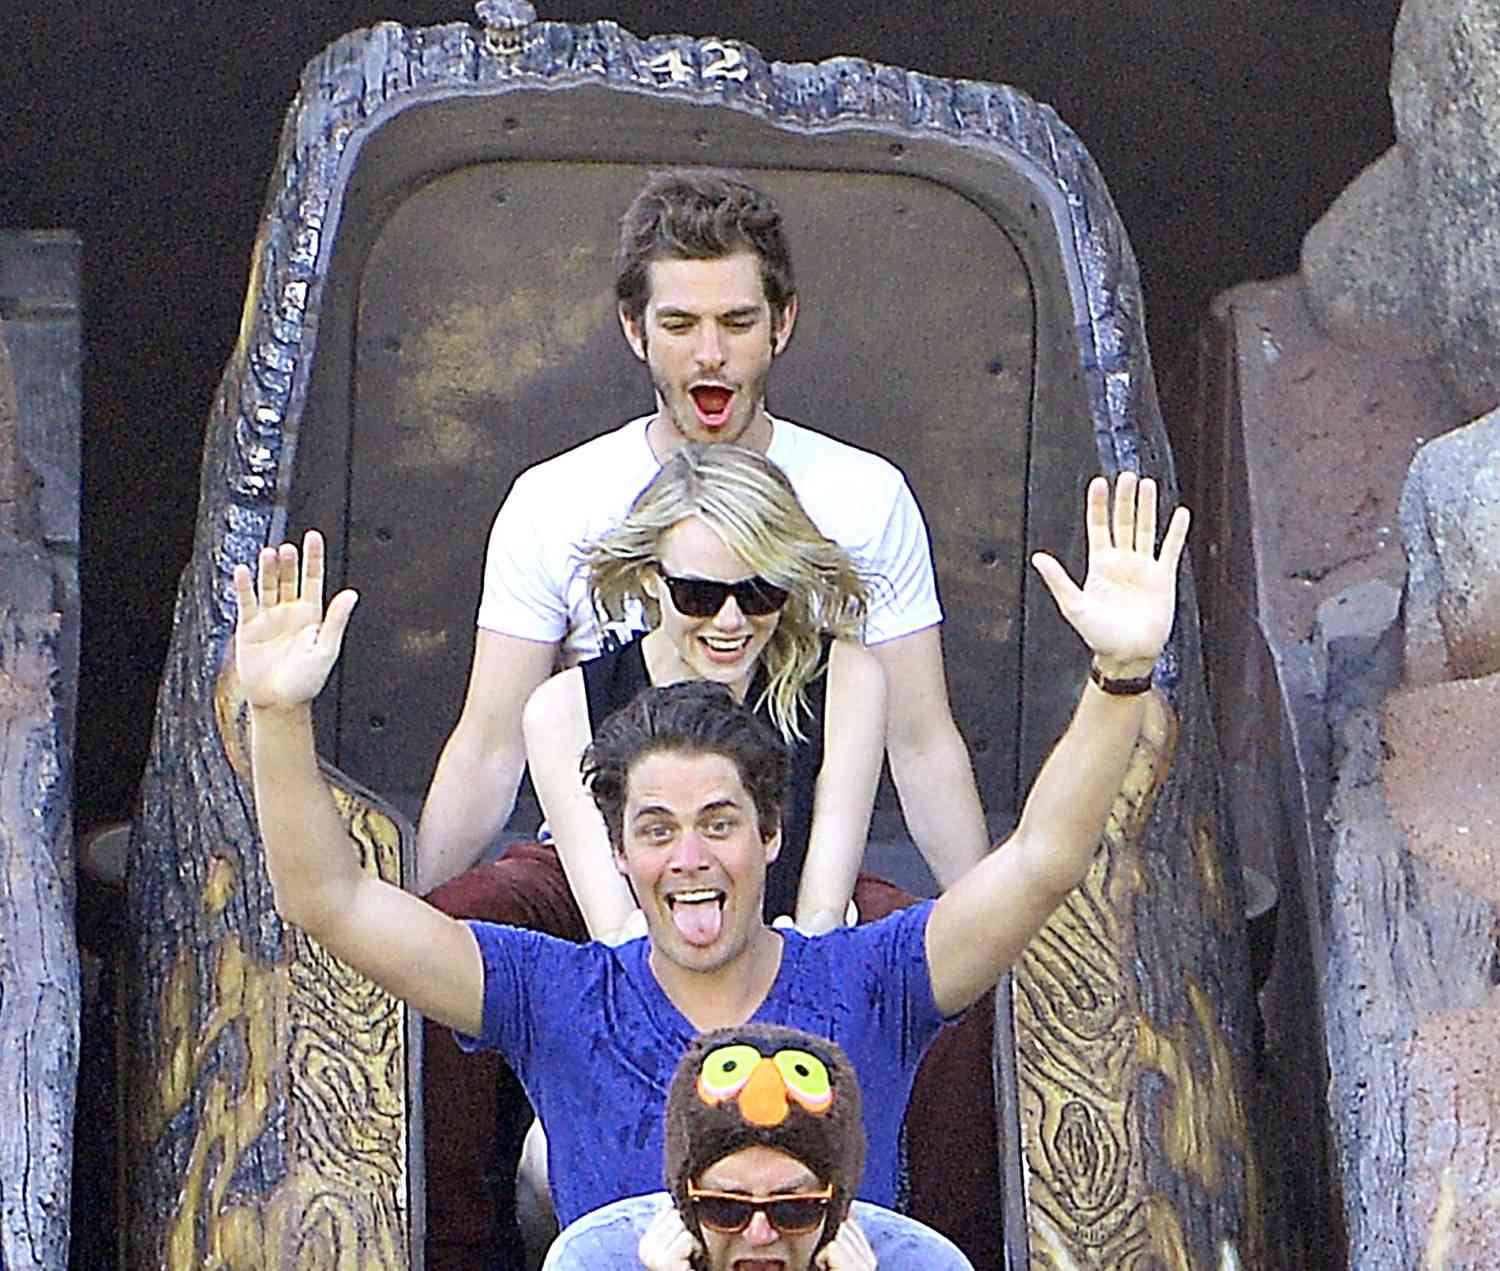 EXCLUSIVE: Andrew Garfield Enjoys His Birthday At Disneyland With Girlfriend Emma Stone.